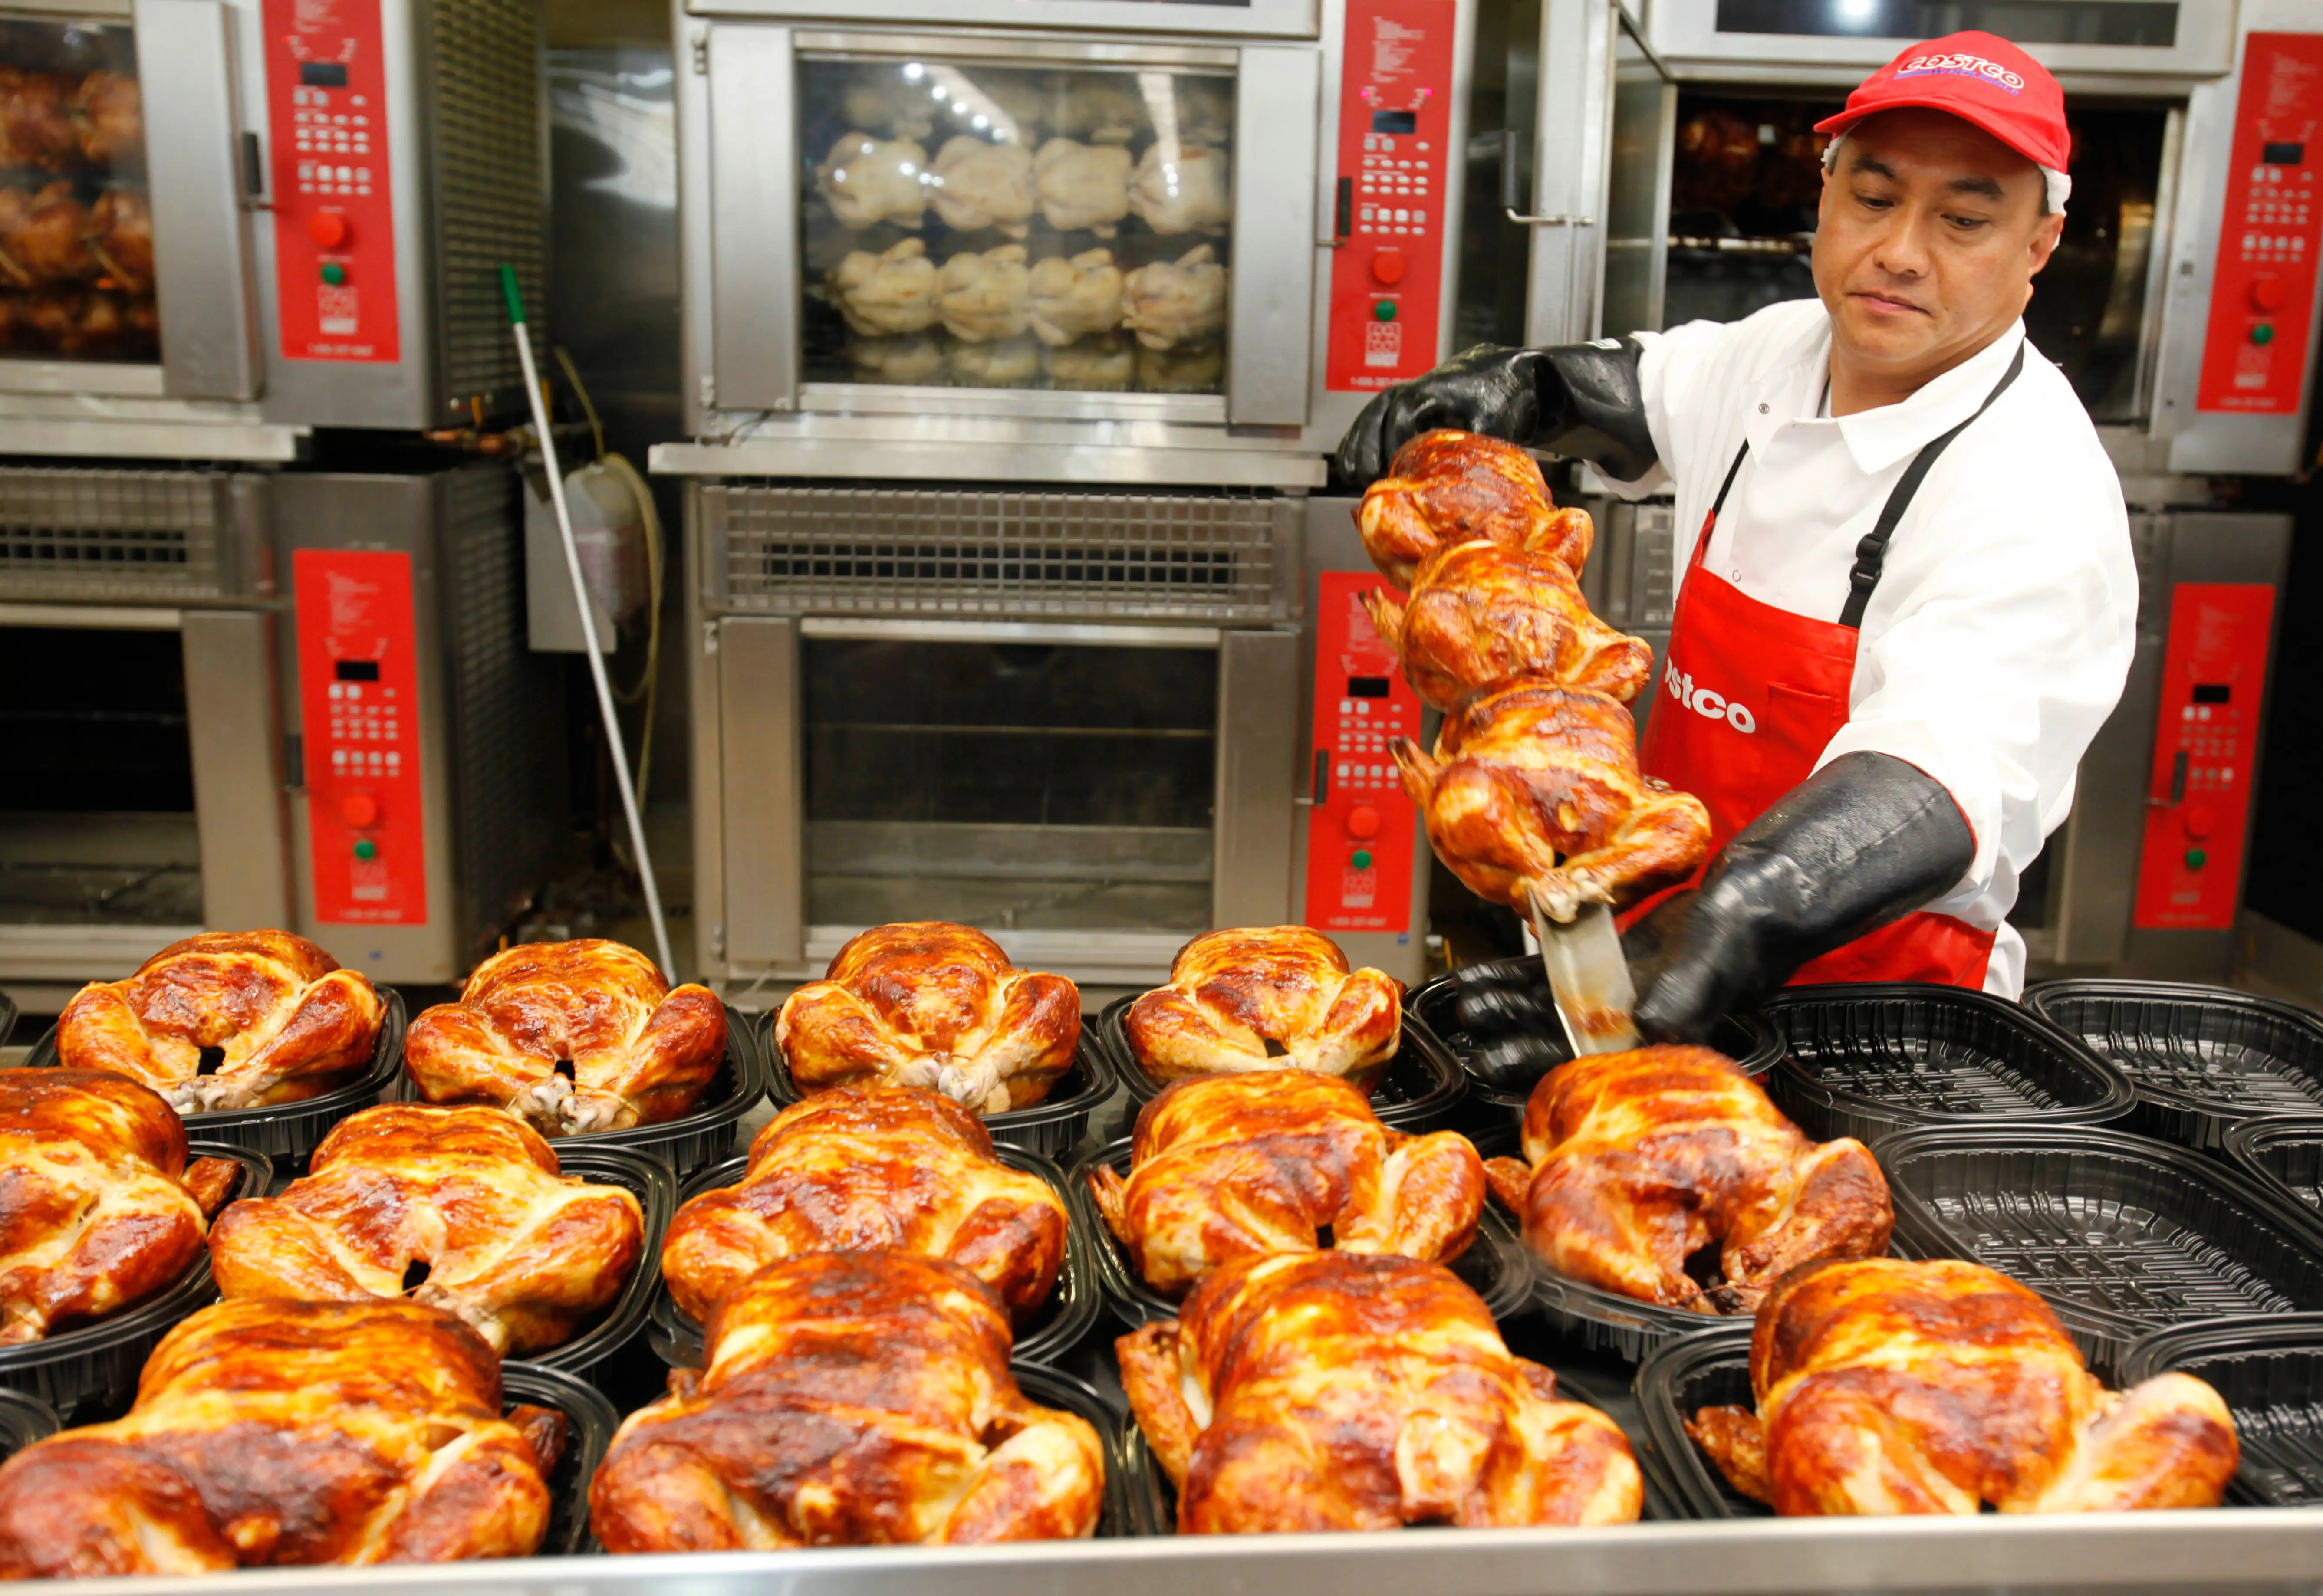 Costco worker cooks chicken at Costco in Mountain View, California